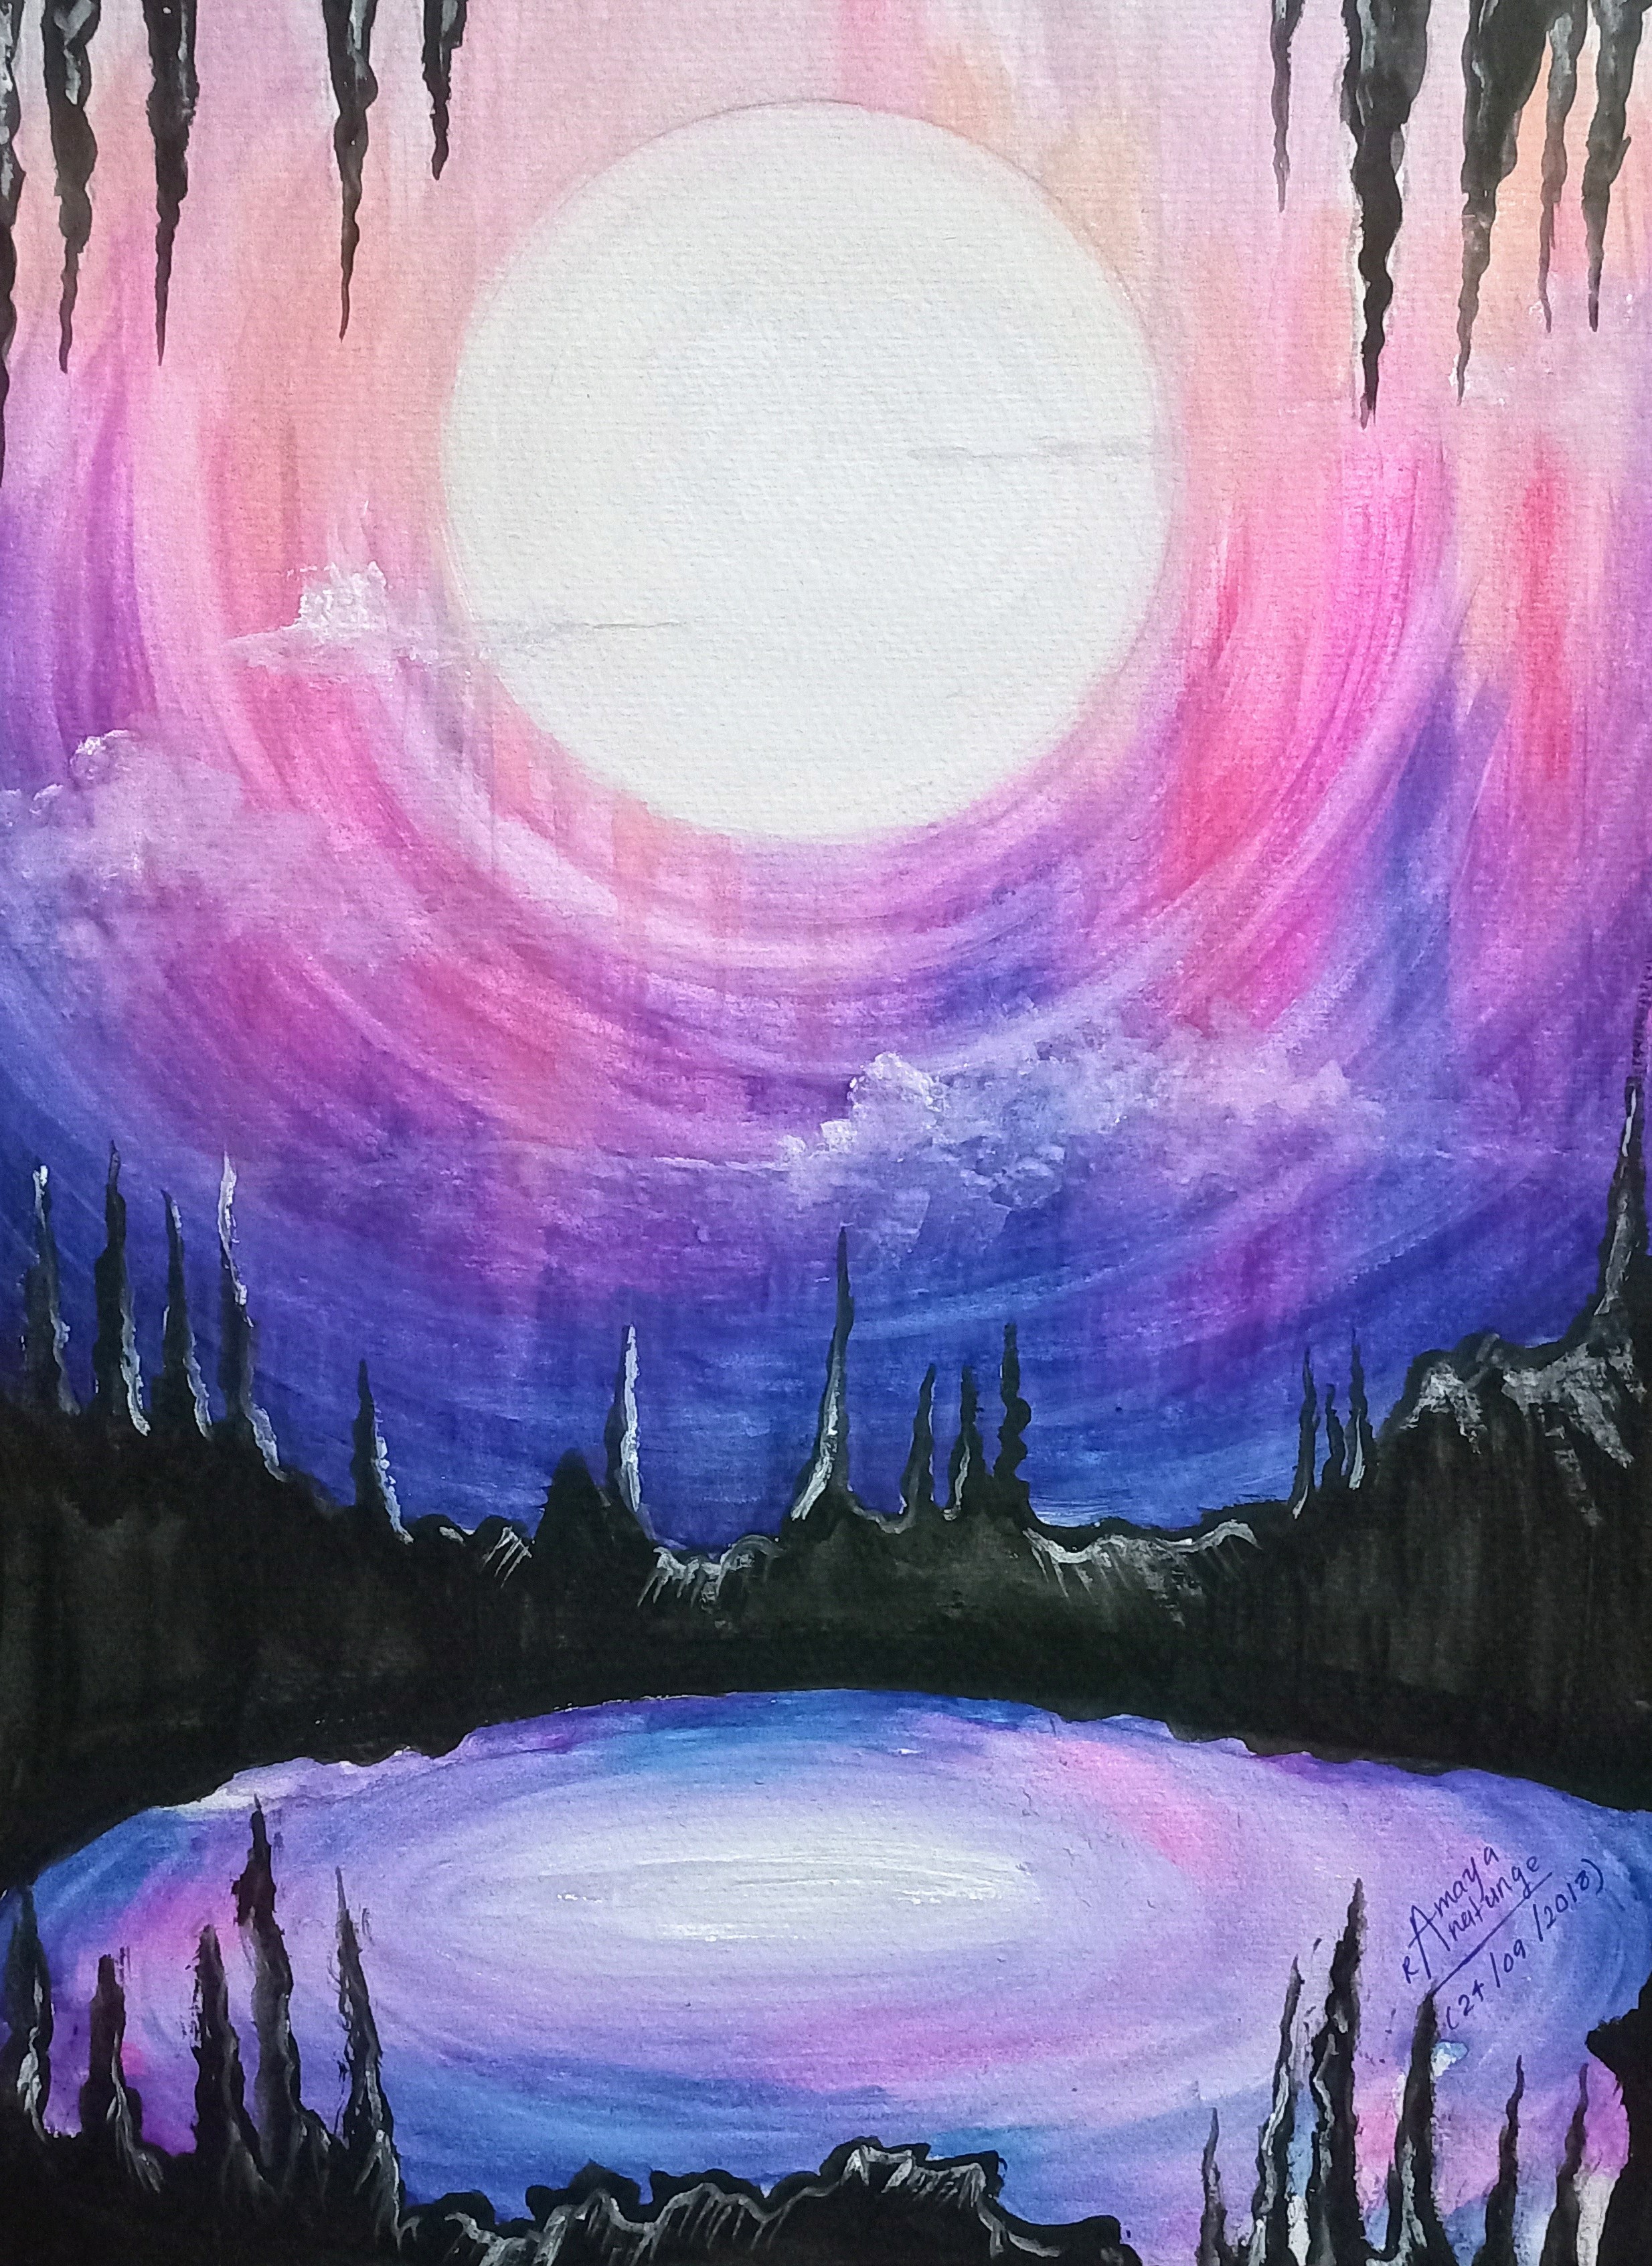 Moon Light Cave by Amaya Ranatunge